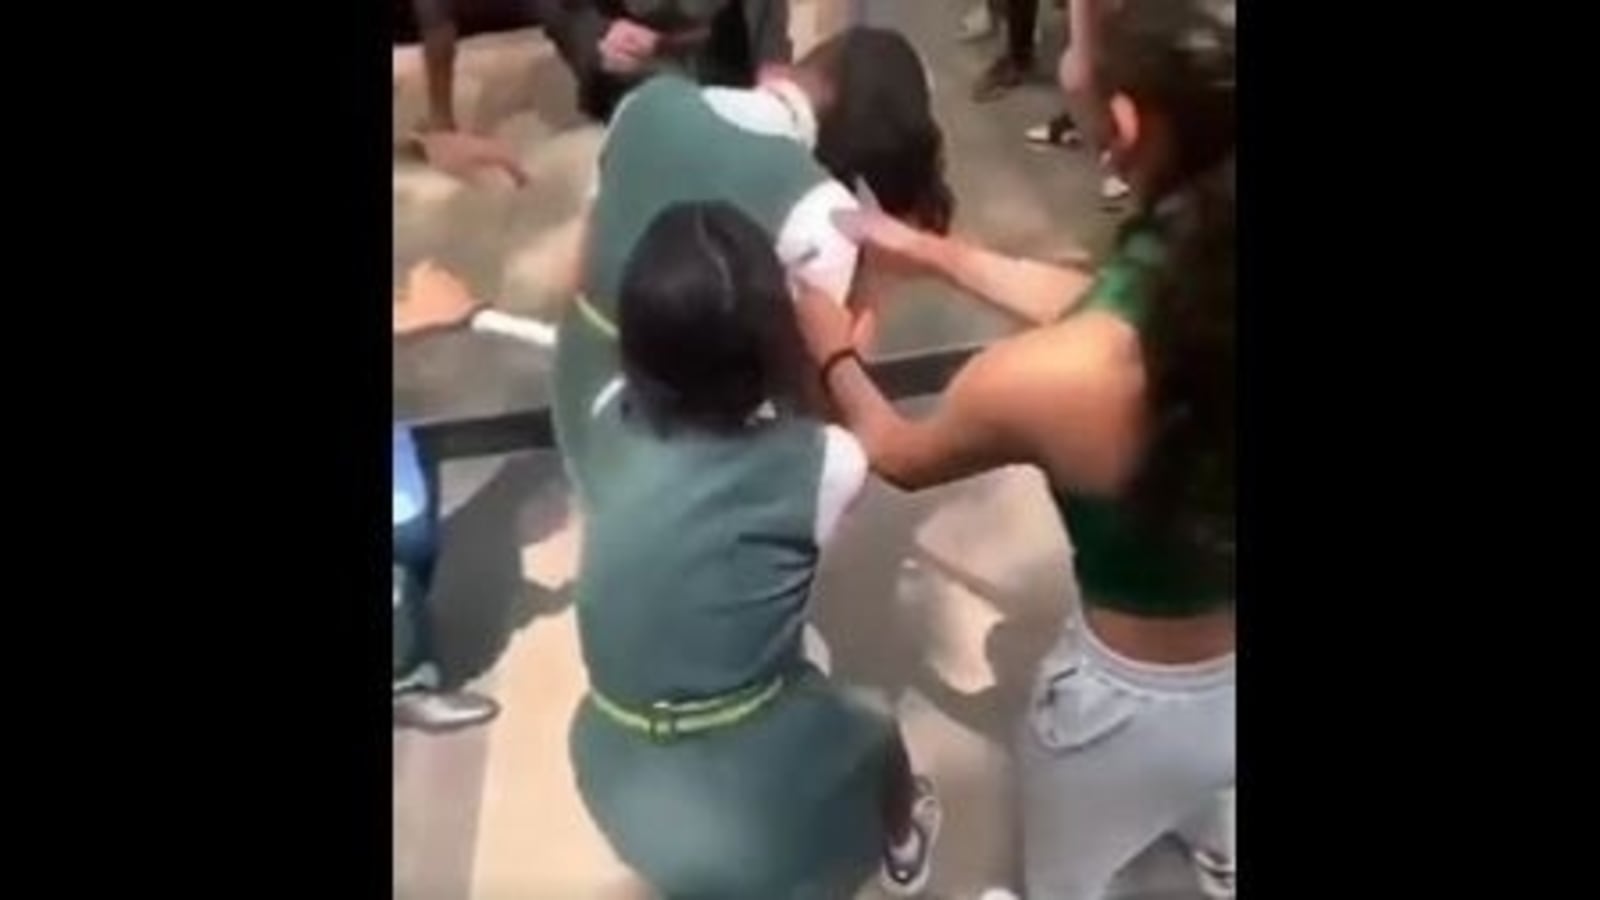 Kajal Saxe Video - Video of Bengaluru girls fighting on street in school uniform emerges |  Latest News India - Hindustan Times